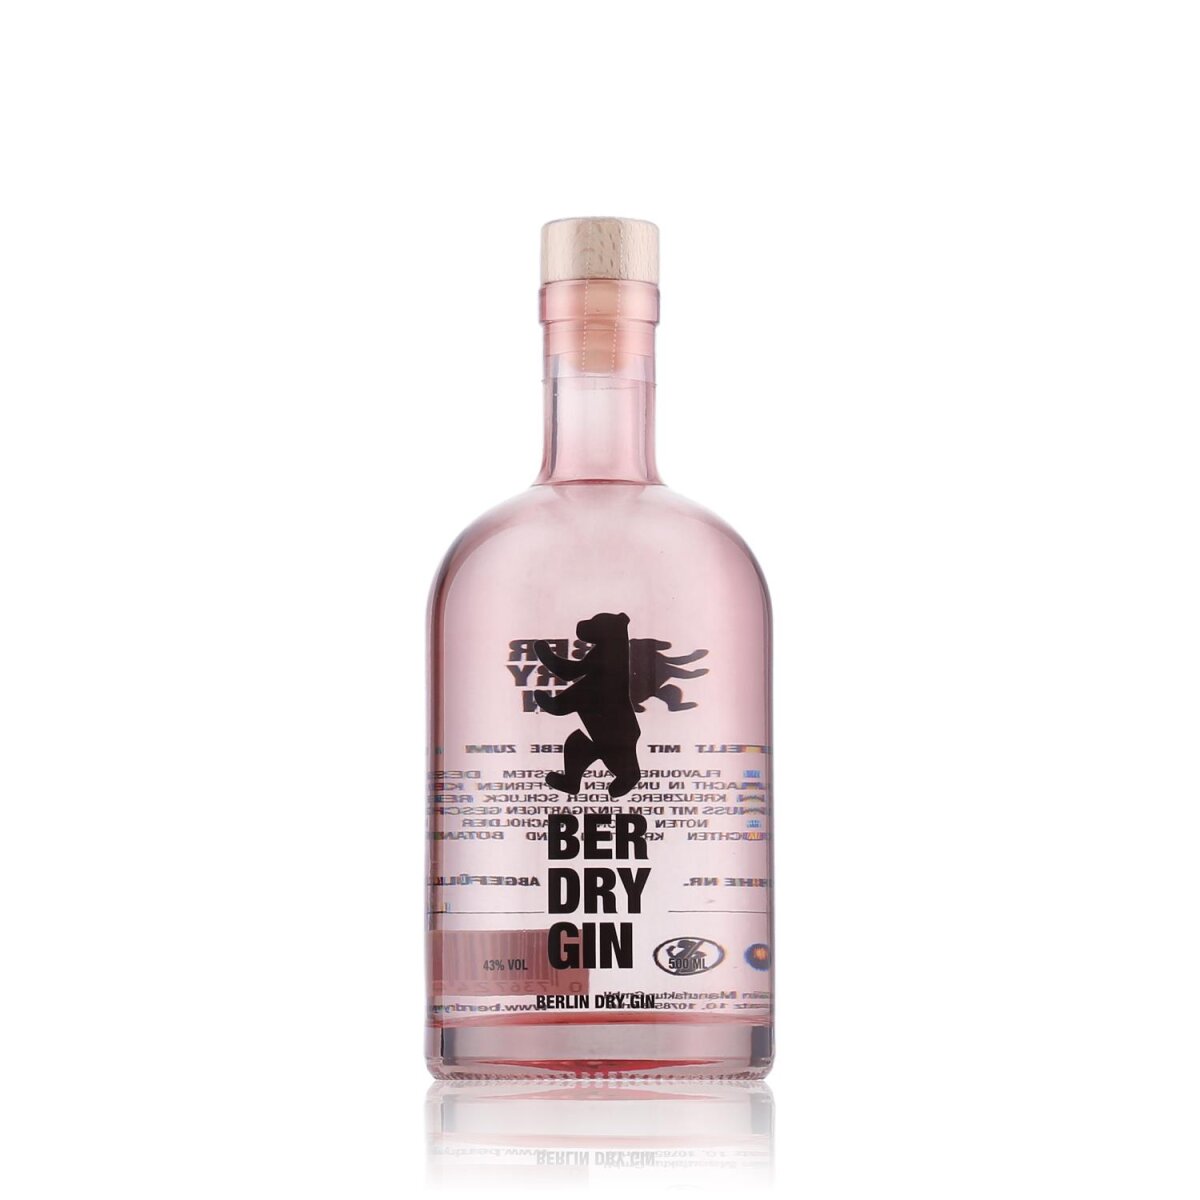 BER Dry Gin 0,5l, € 22,99